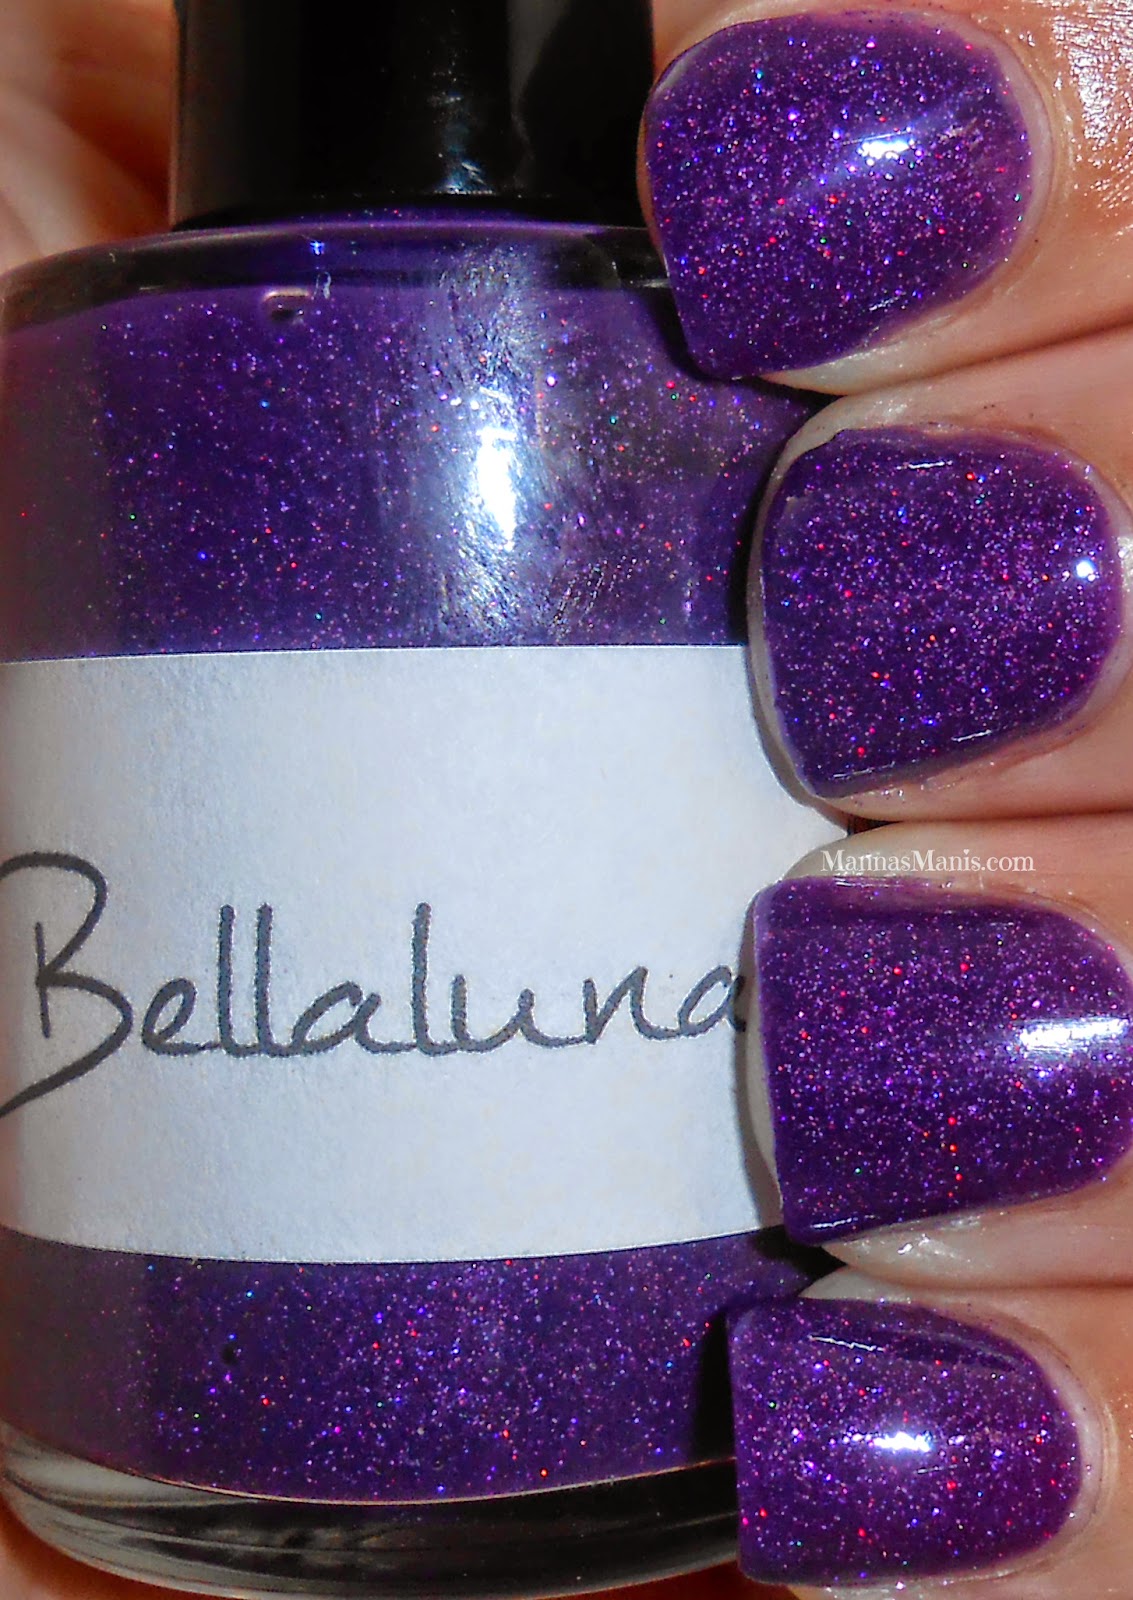 Bellaluna Sugar Plum Fairy, a deep purple nail polish